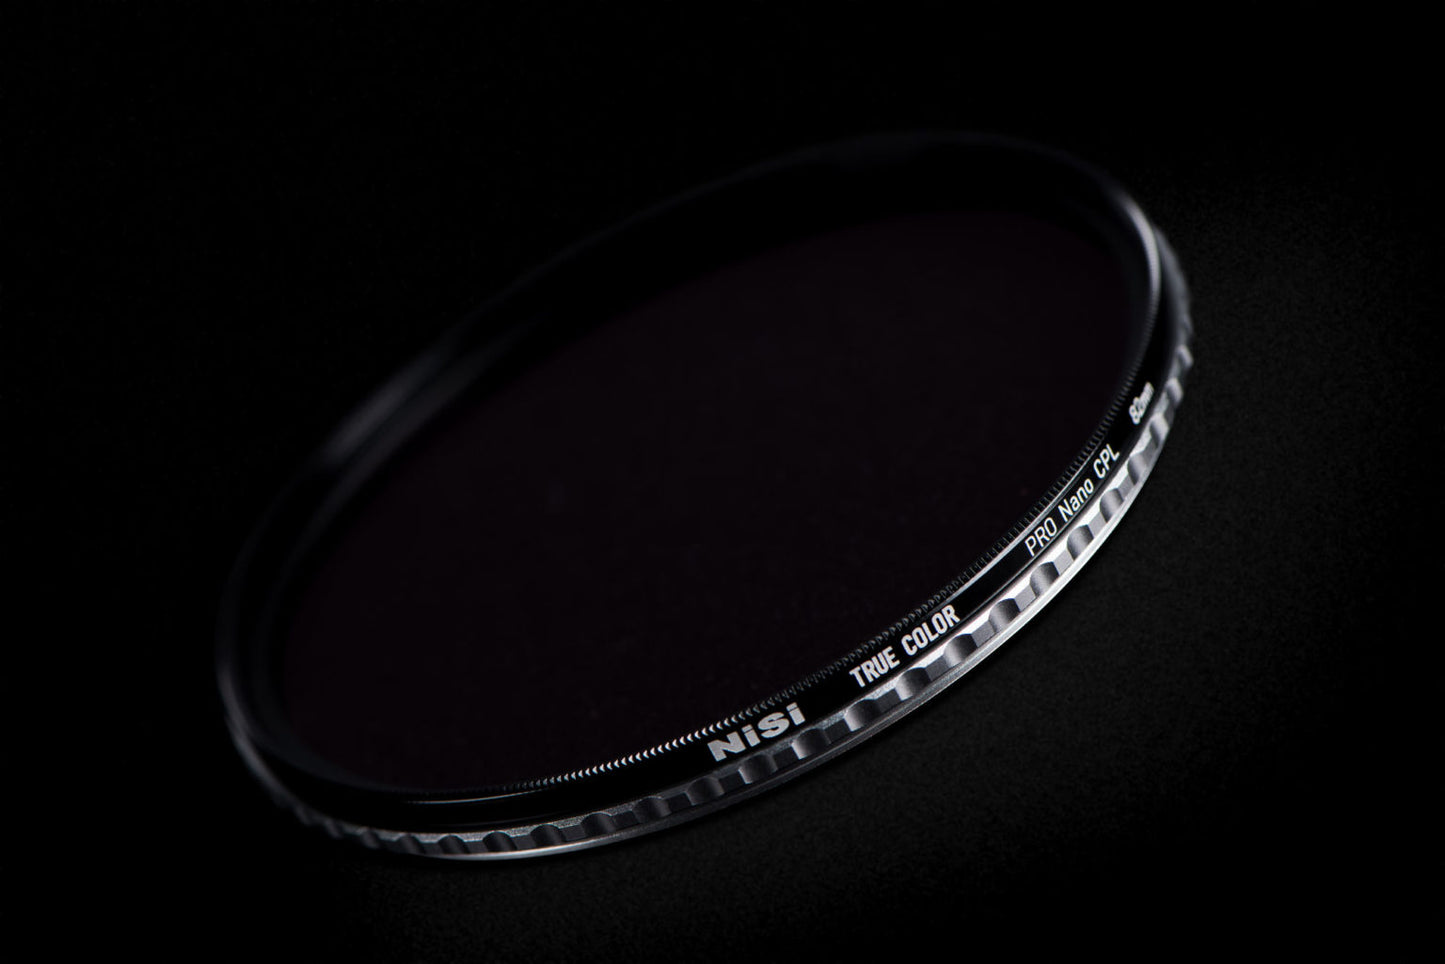 NiSi 72mm True Color Pro Nano CPL Circular Polarizing Filter